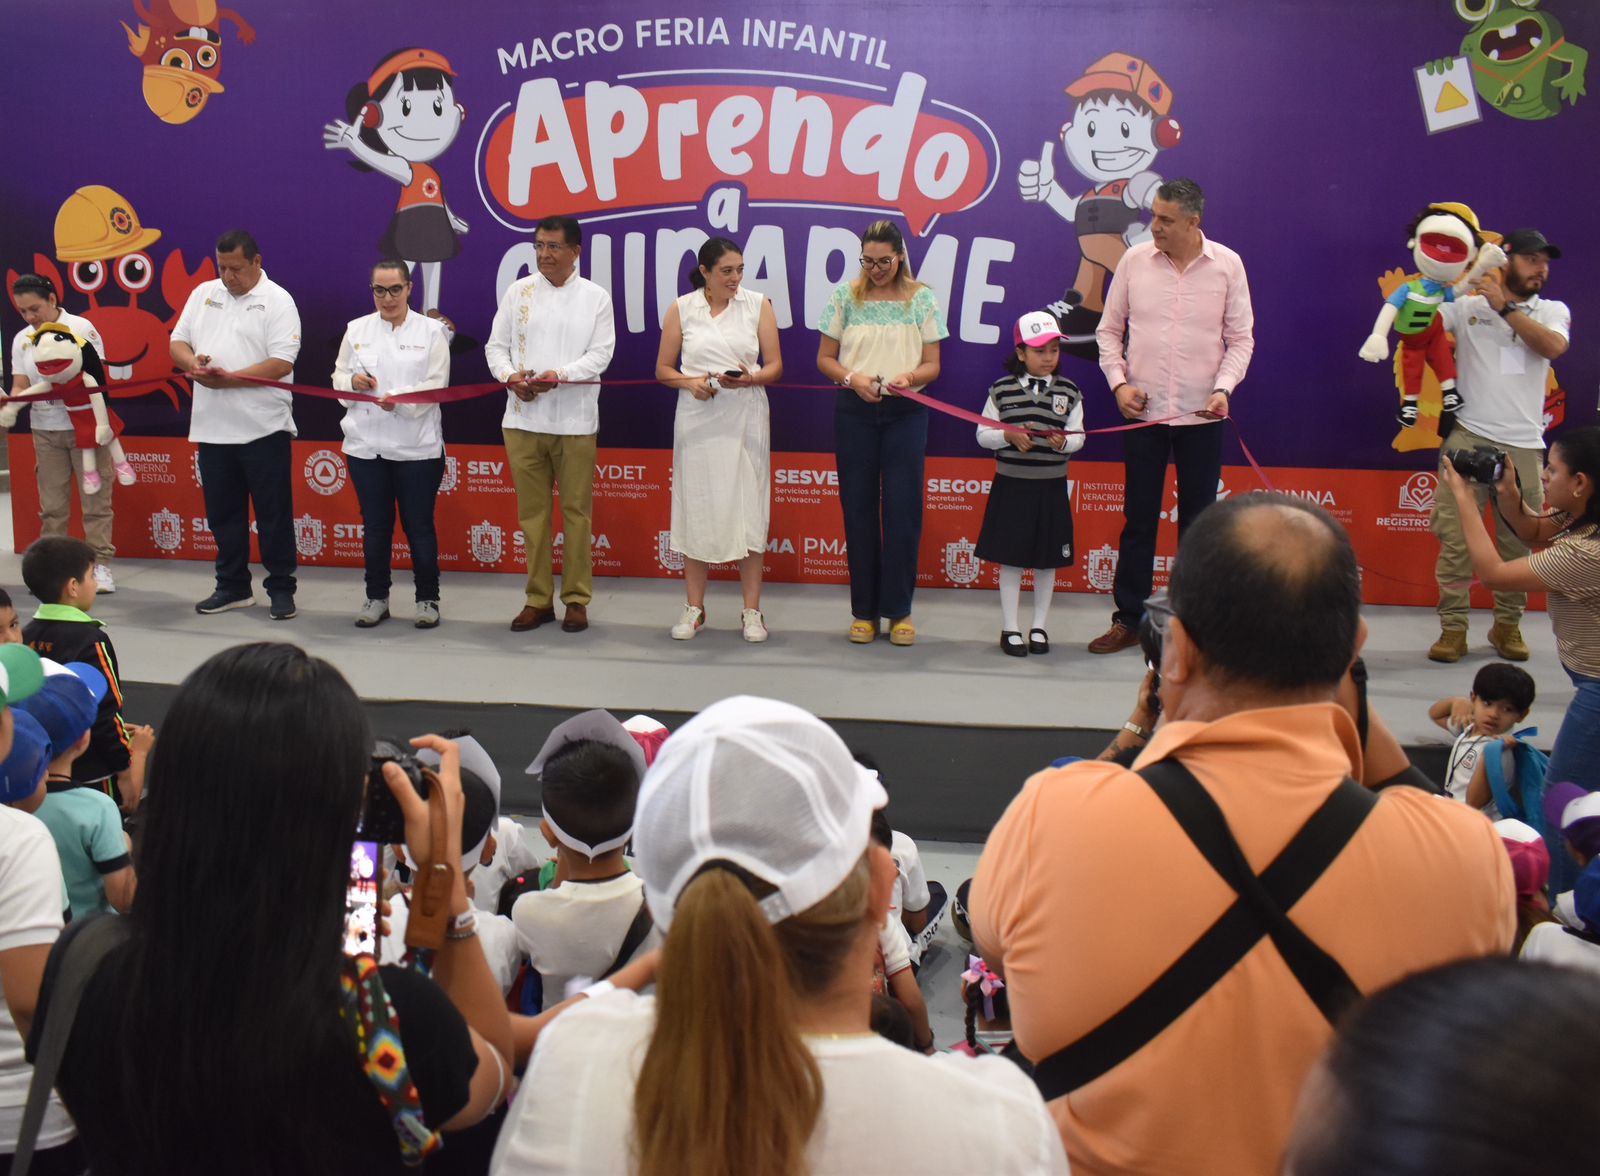 Velódromo de Xalapa sede de Macro Feria Infantil “Aprendo a cuidarme»